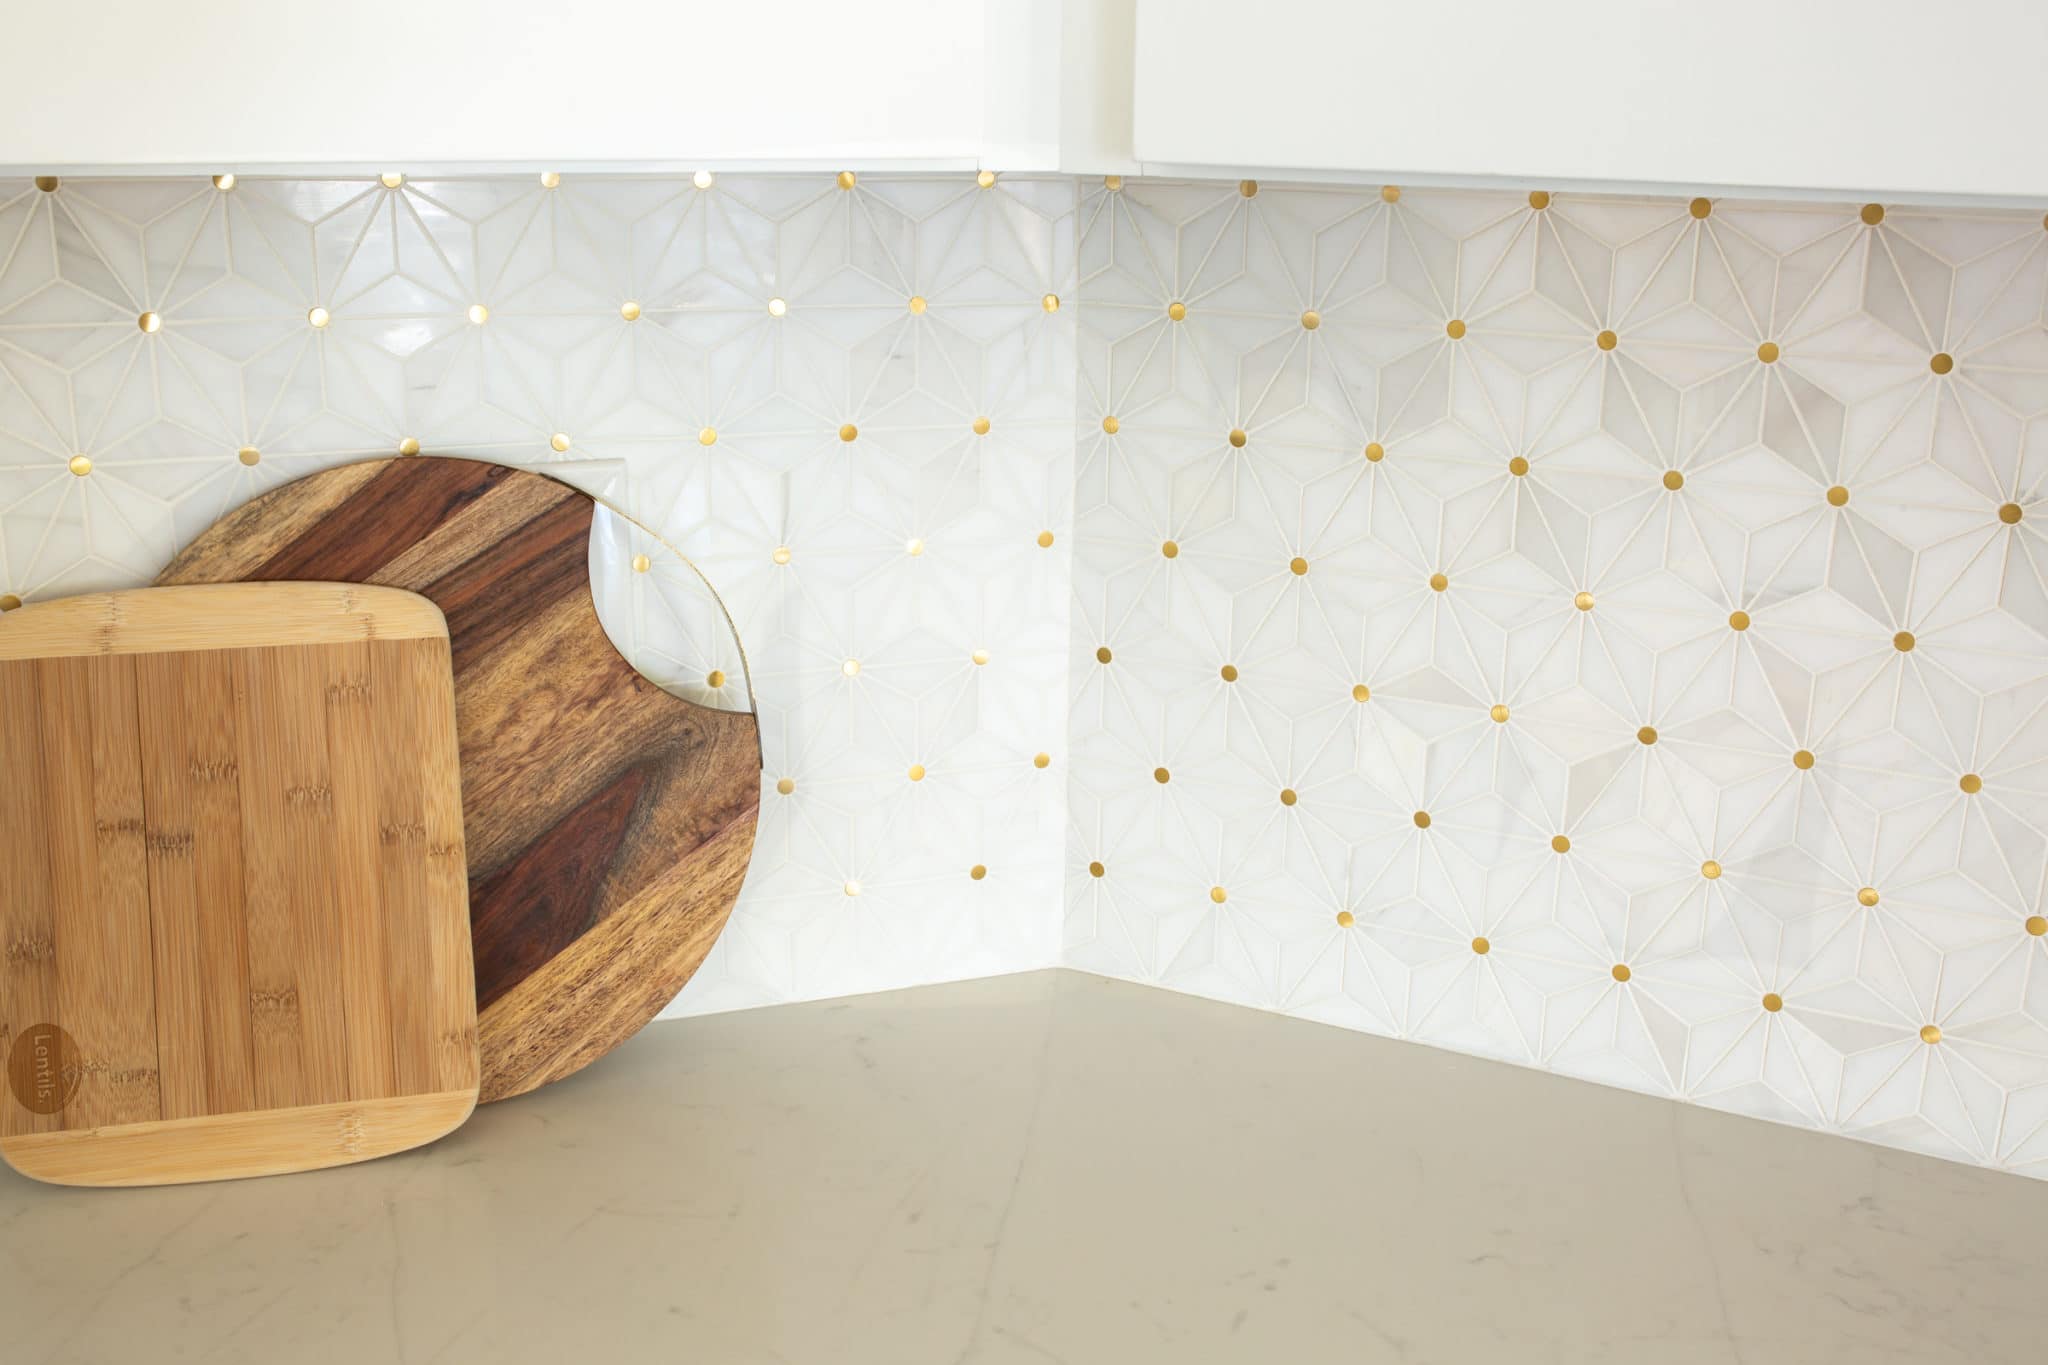 Kitchen Backsplash with White Cabinets: Our Contemporary Backsplash Tile Reveal